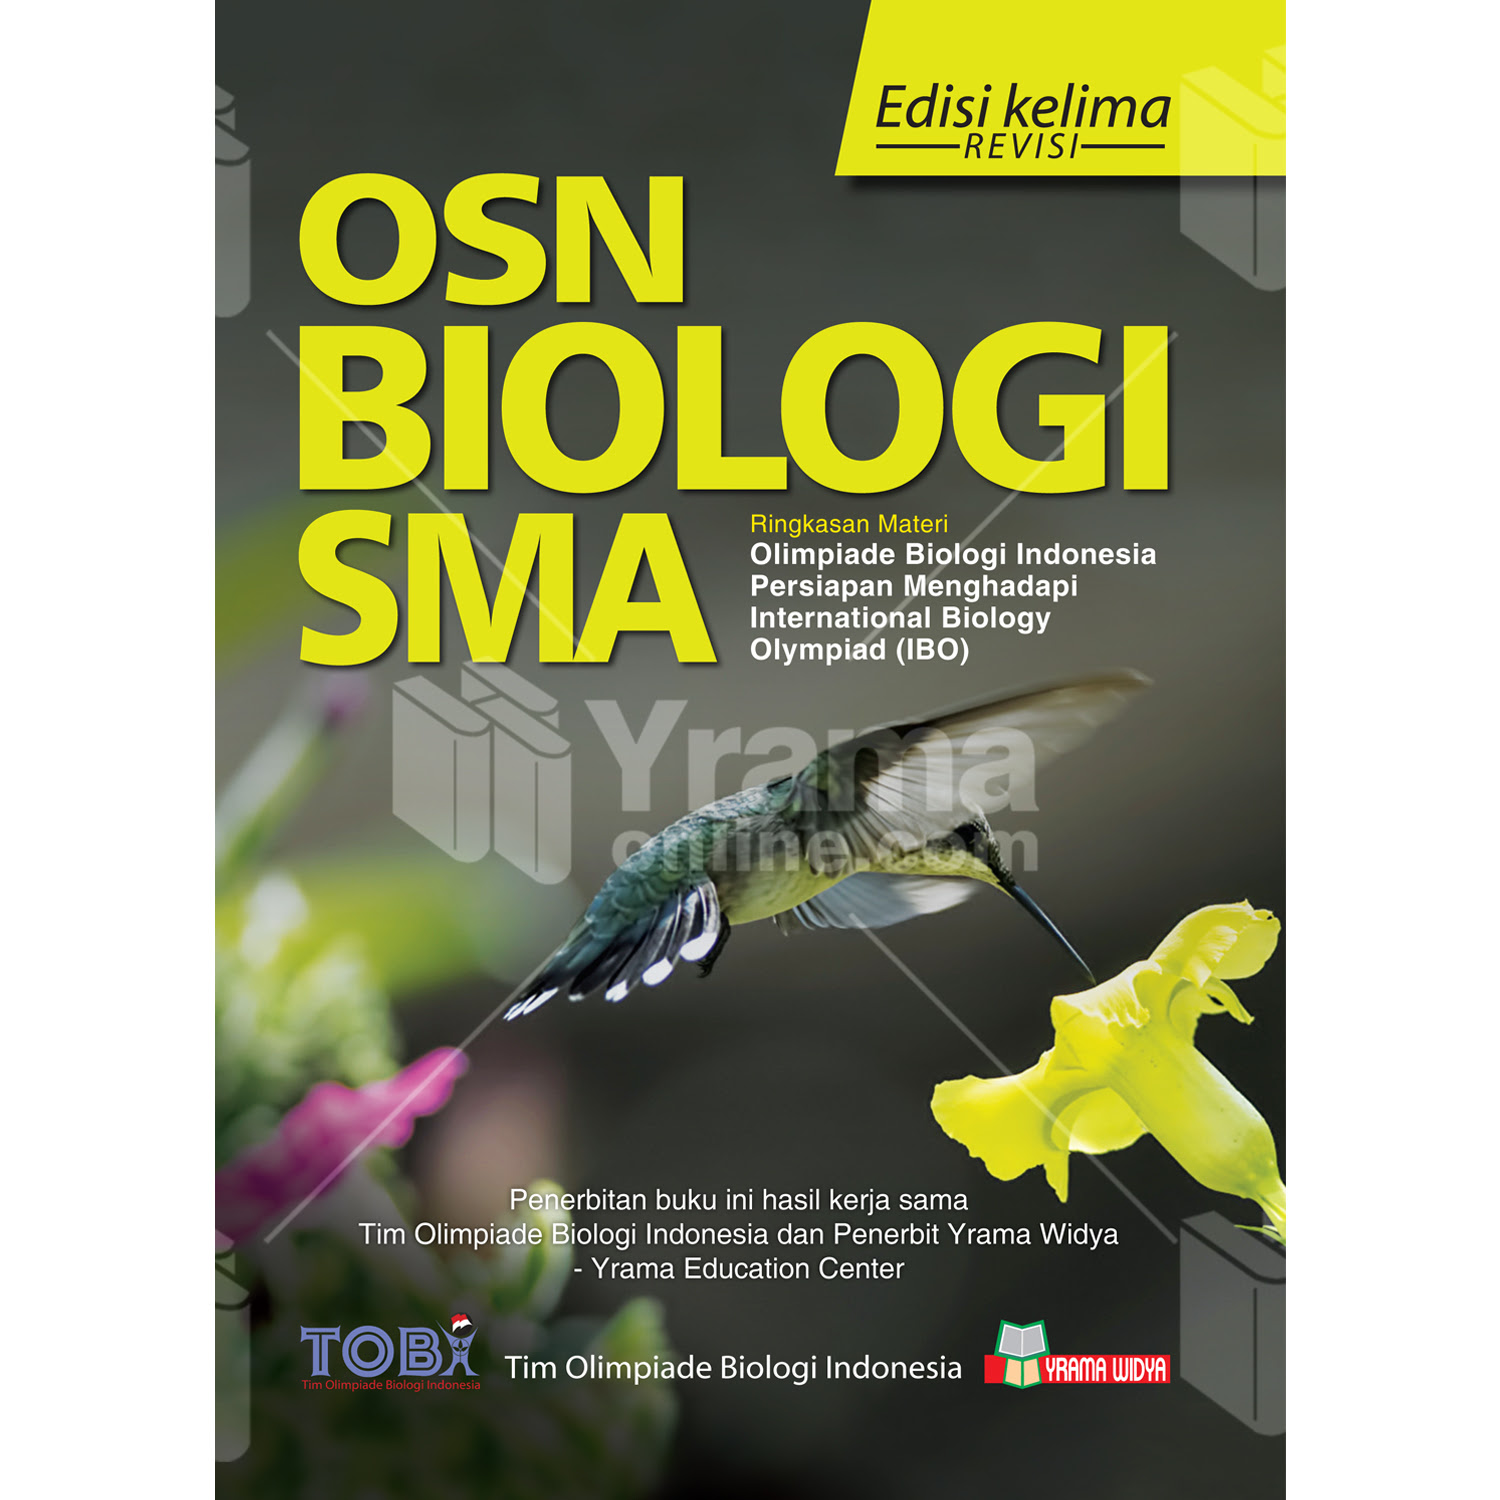 Buku Osn Biologi Sma Edisi Kelima Revisi